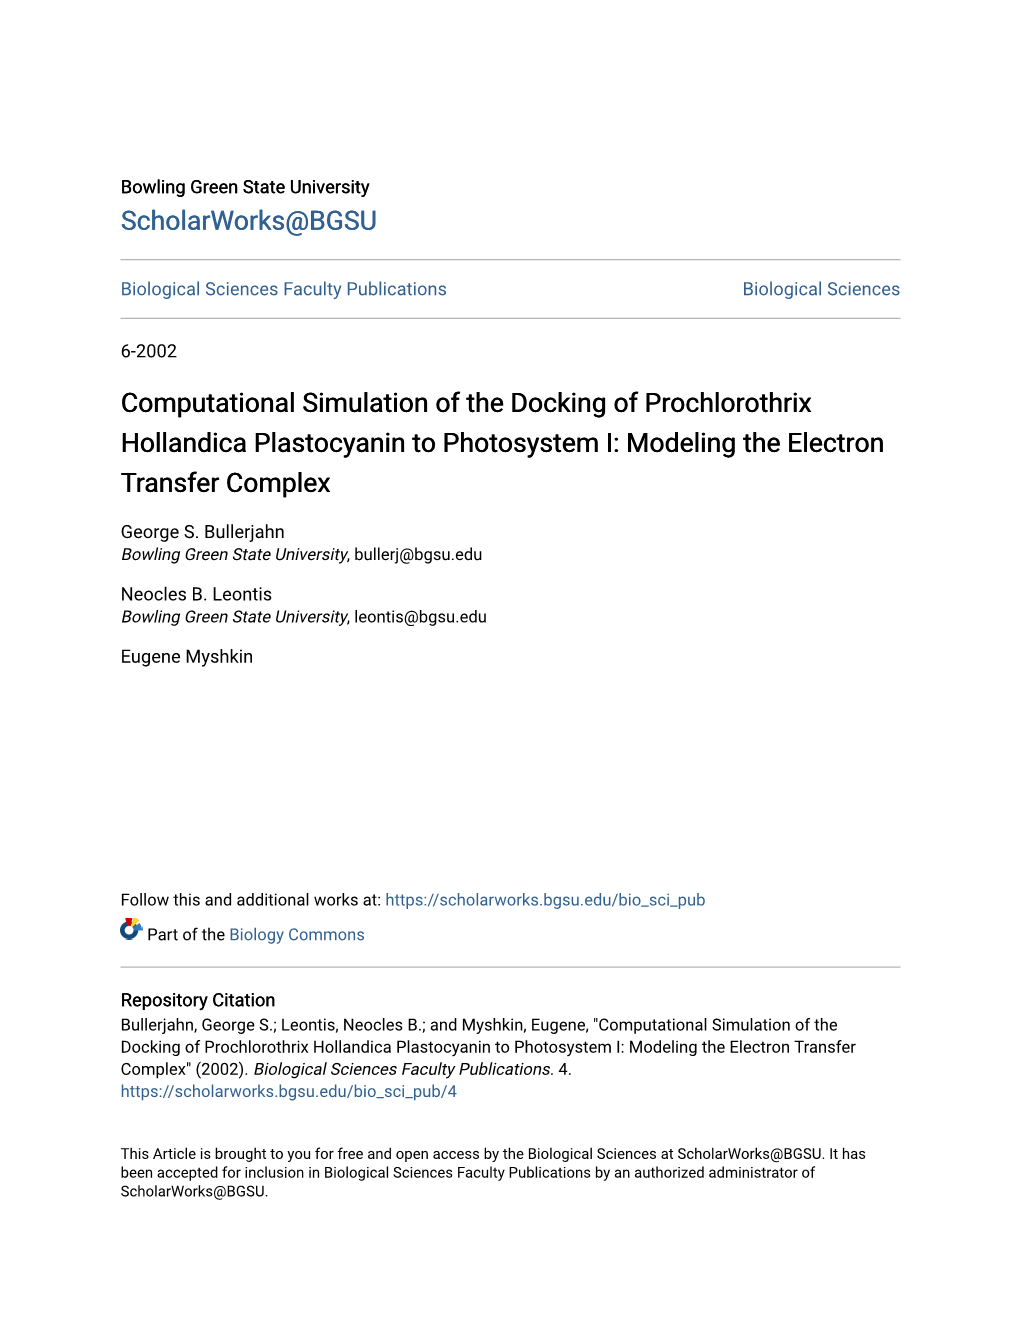 Computational Simulation of the Docking of Prochlorothrix Hollandica Plastocyanin to Photosystem I: Modeling the Electron Transfer Complex